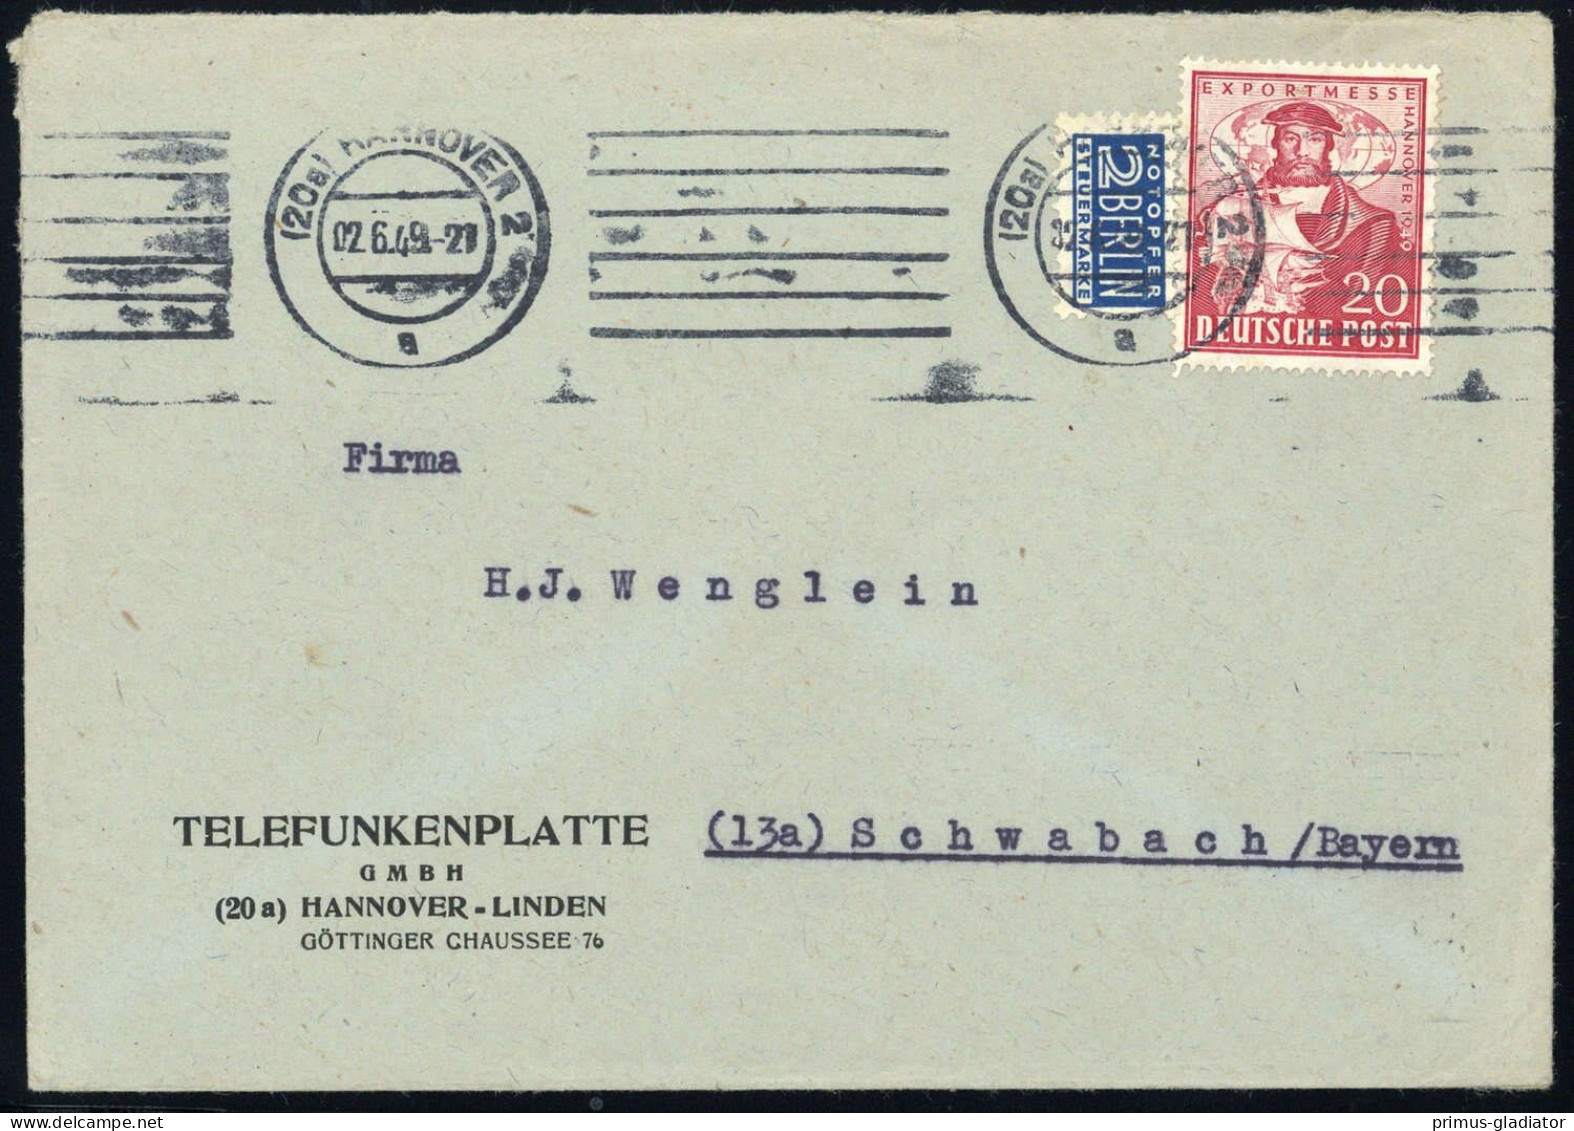 1949, Bizone, 104, Brief - Briefe U. Dokumente